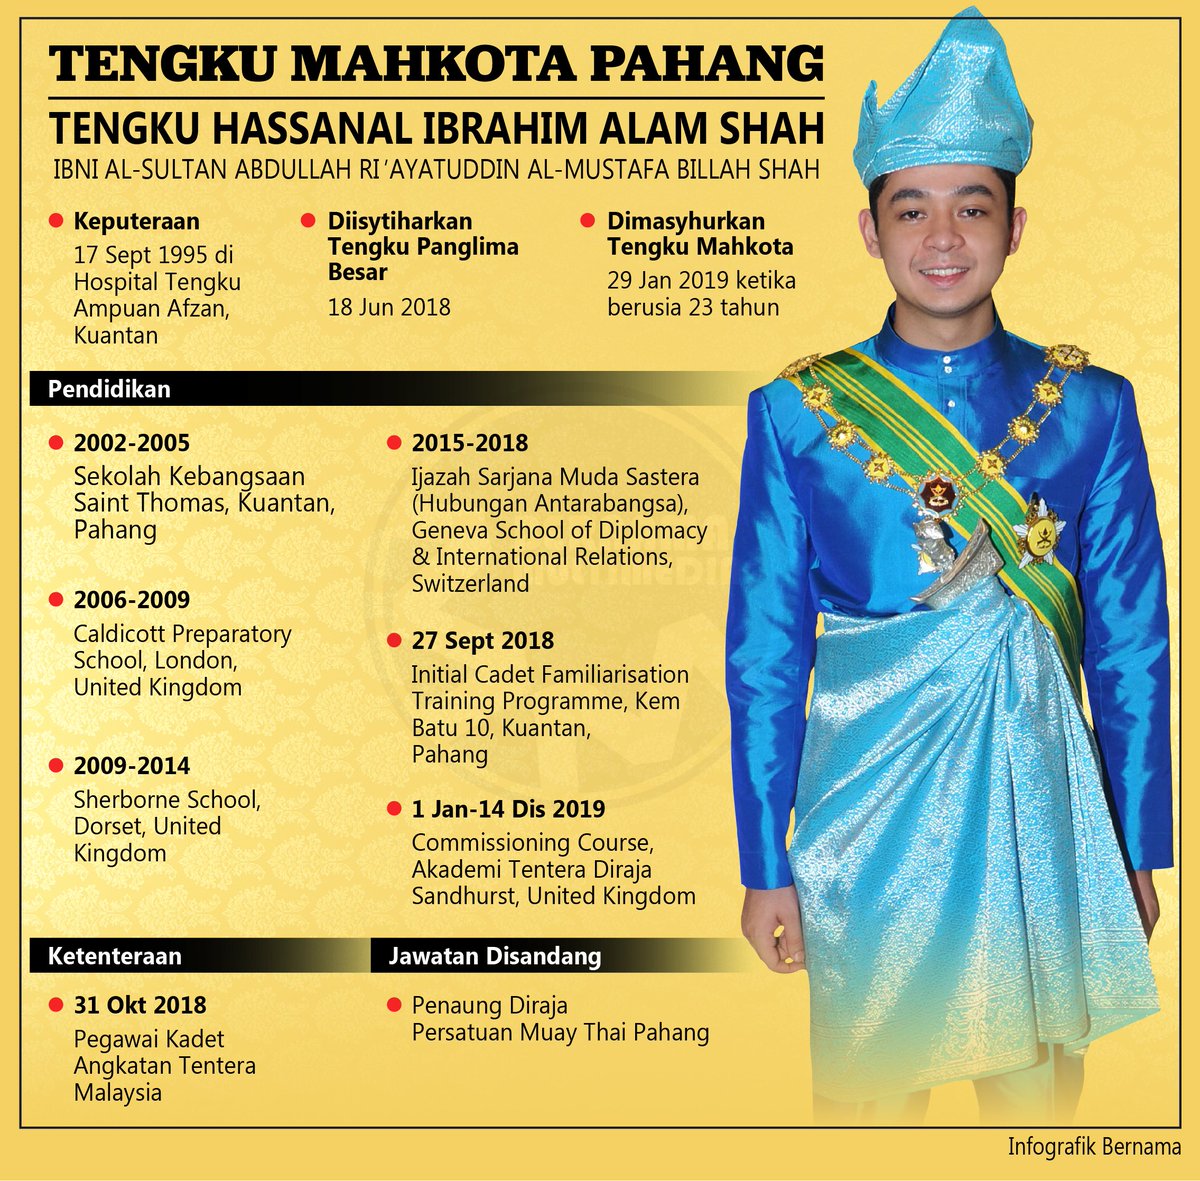 Siblings alam shah tengku hassanal ibrahim Tengku Hassanal